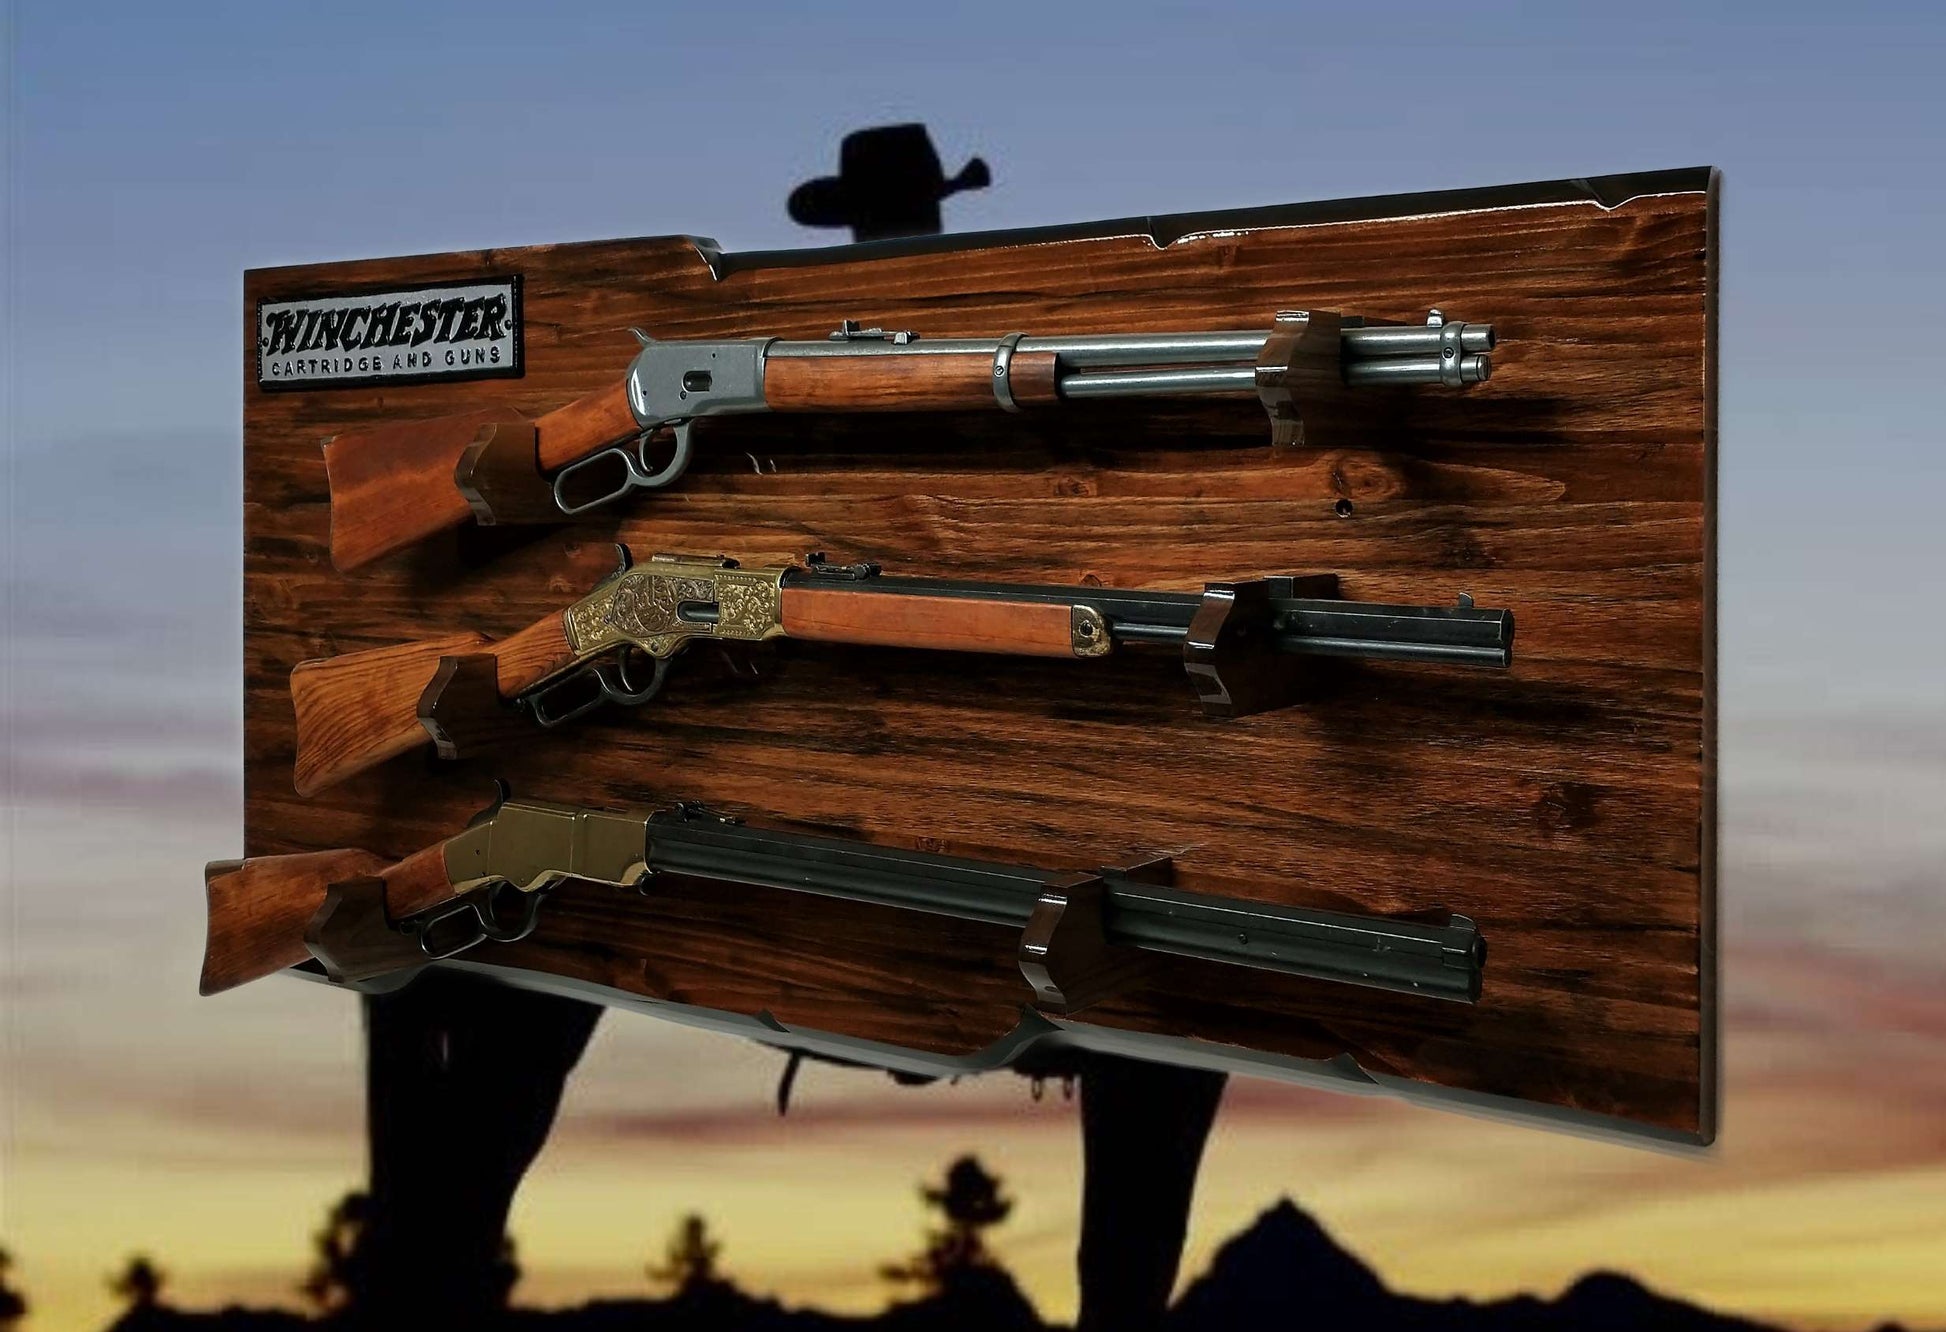 walkerwoodgifts Home & Garden Rustic 3 Place Lever Action Gun Display Winchester Plaque Bullet Style Gun Holders